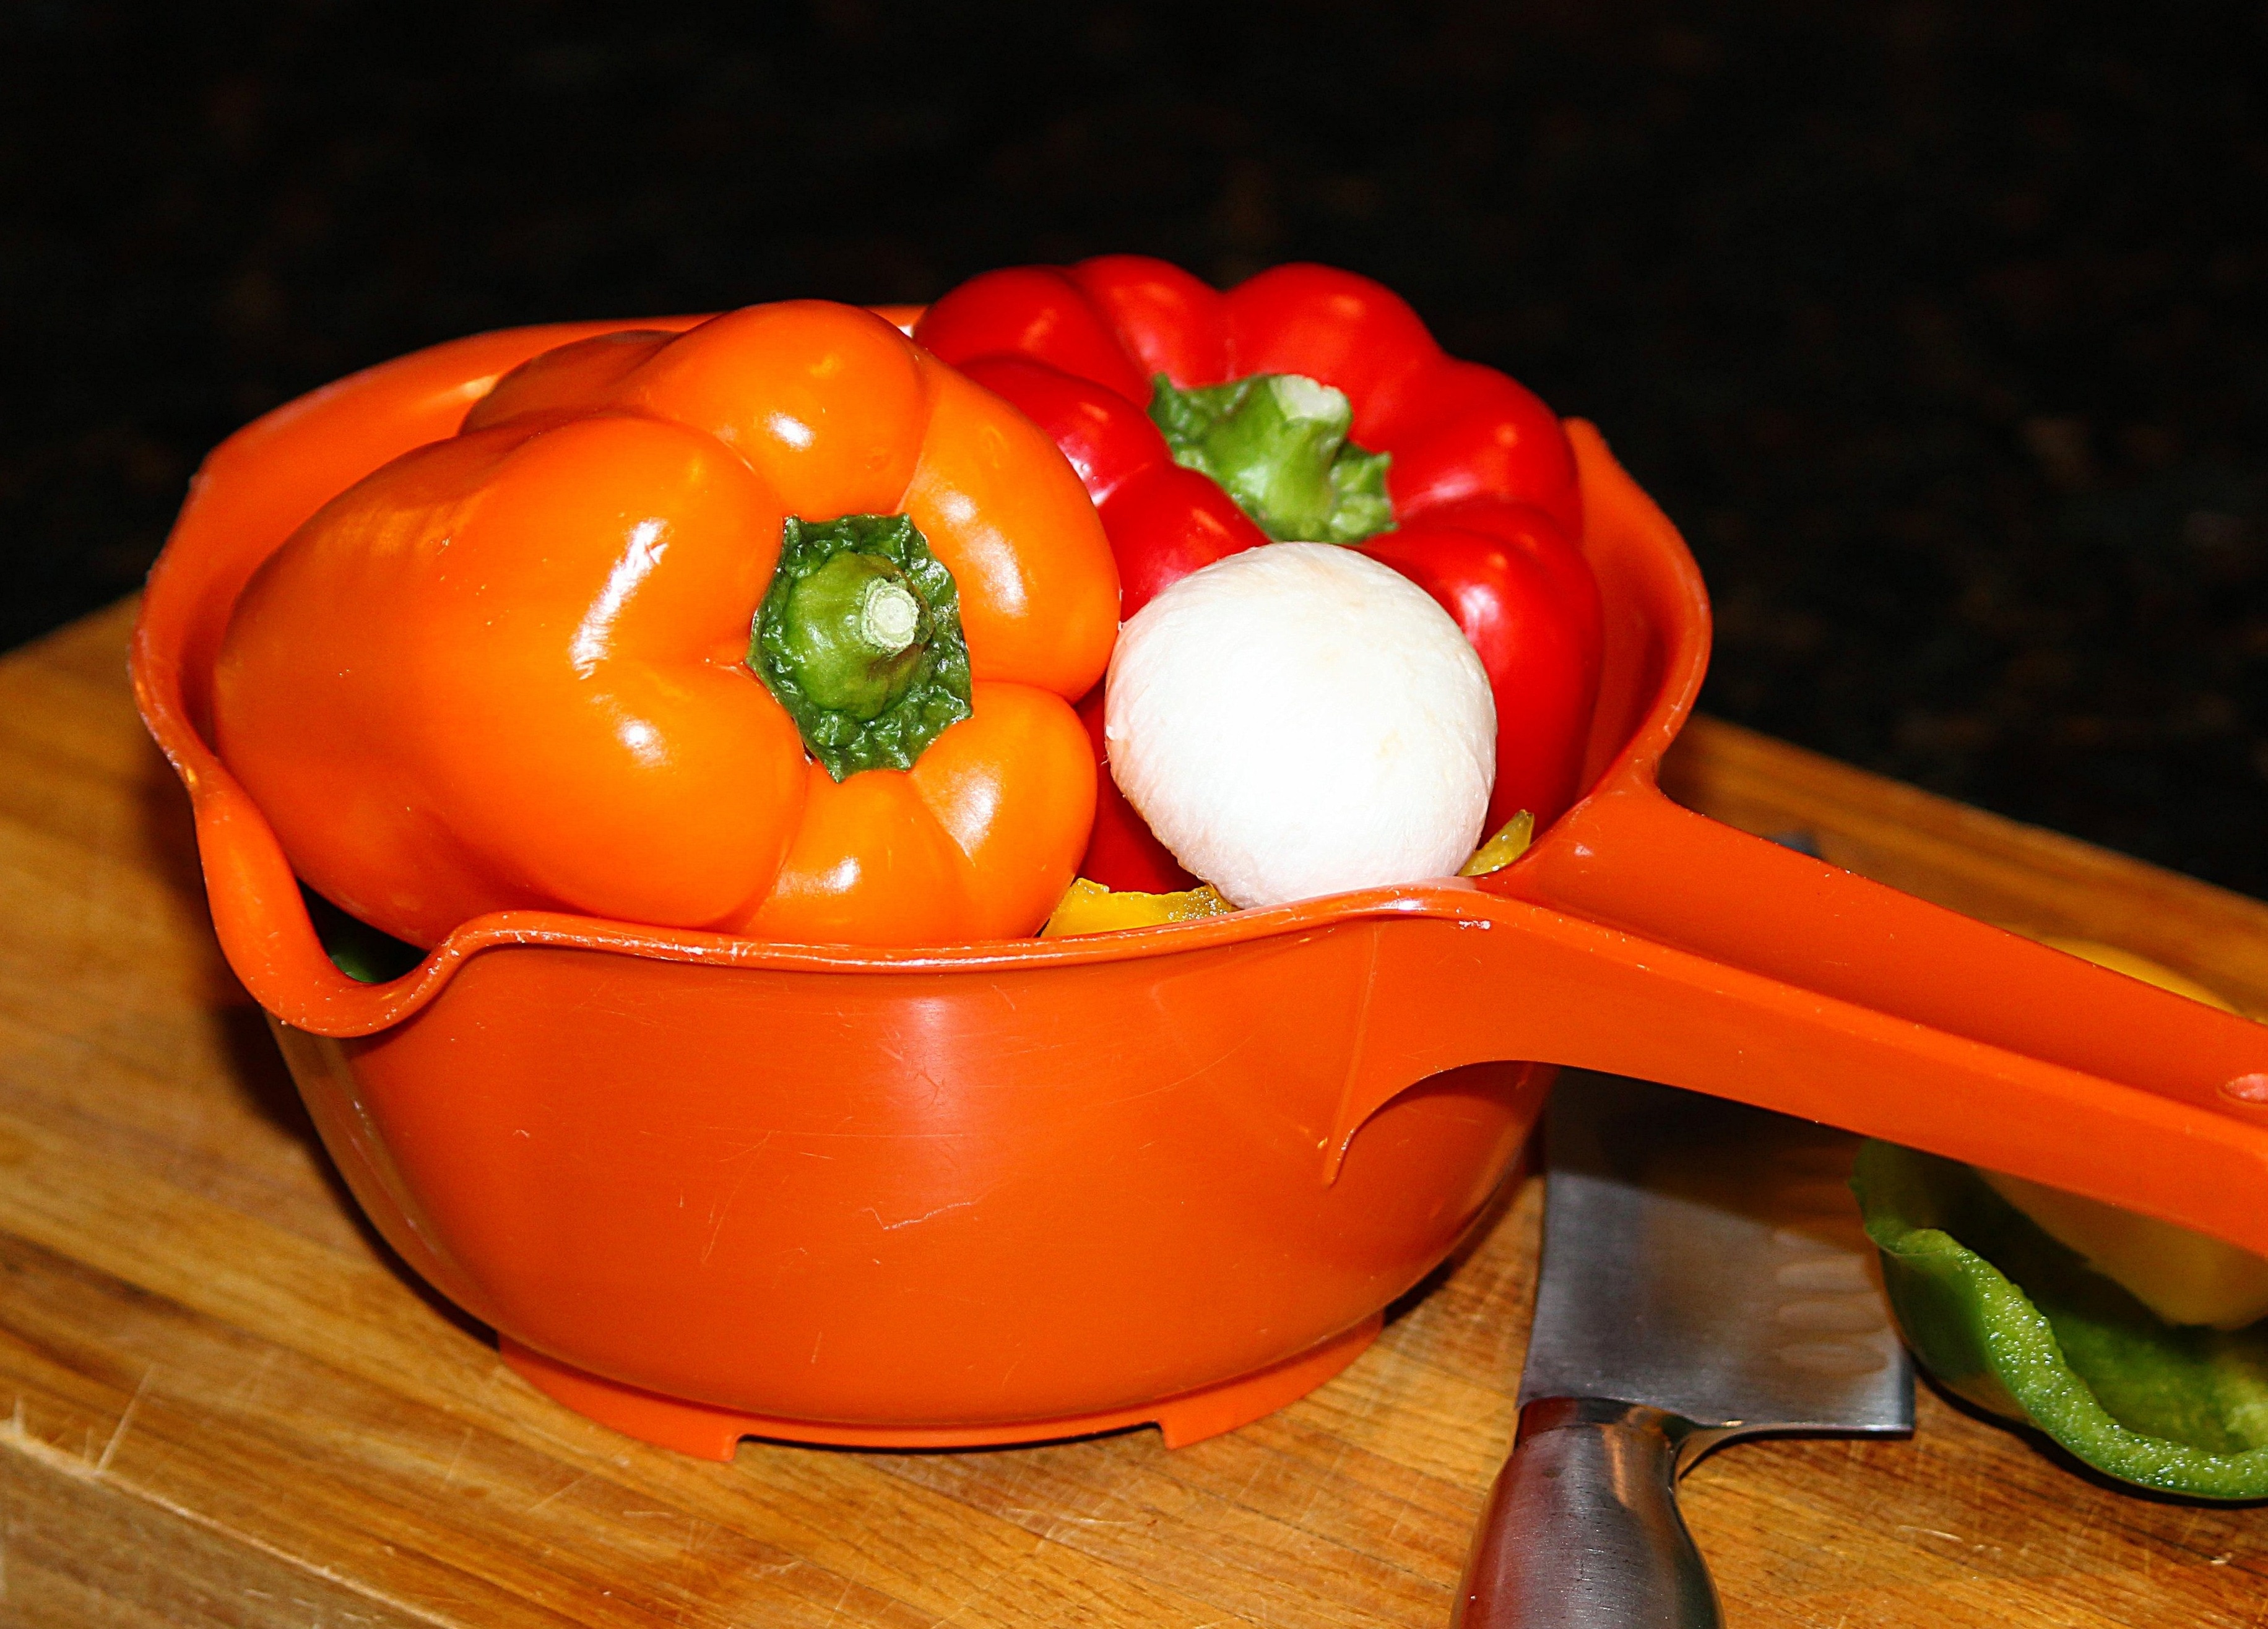 red and orange bell pepper on orange plastic dipper